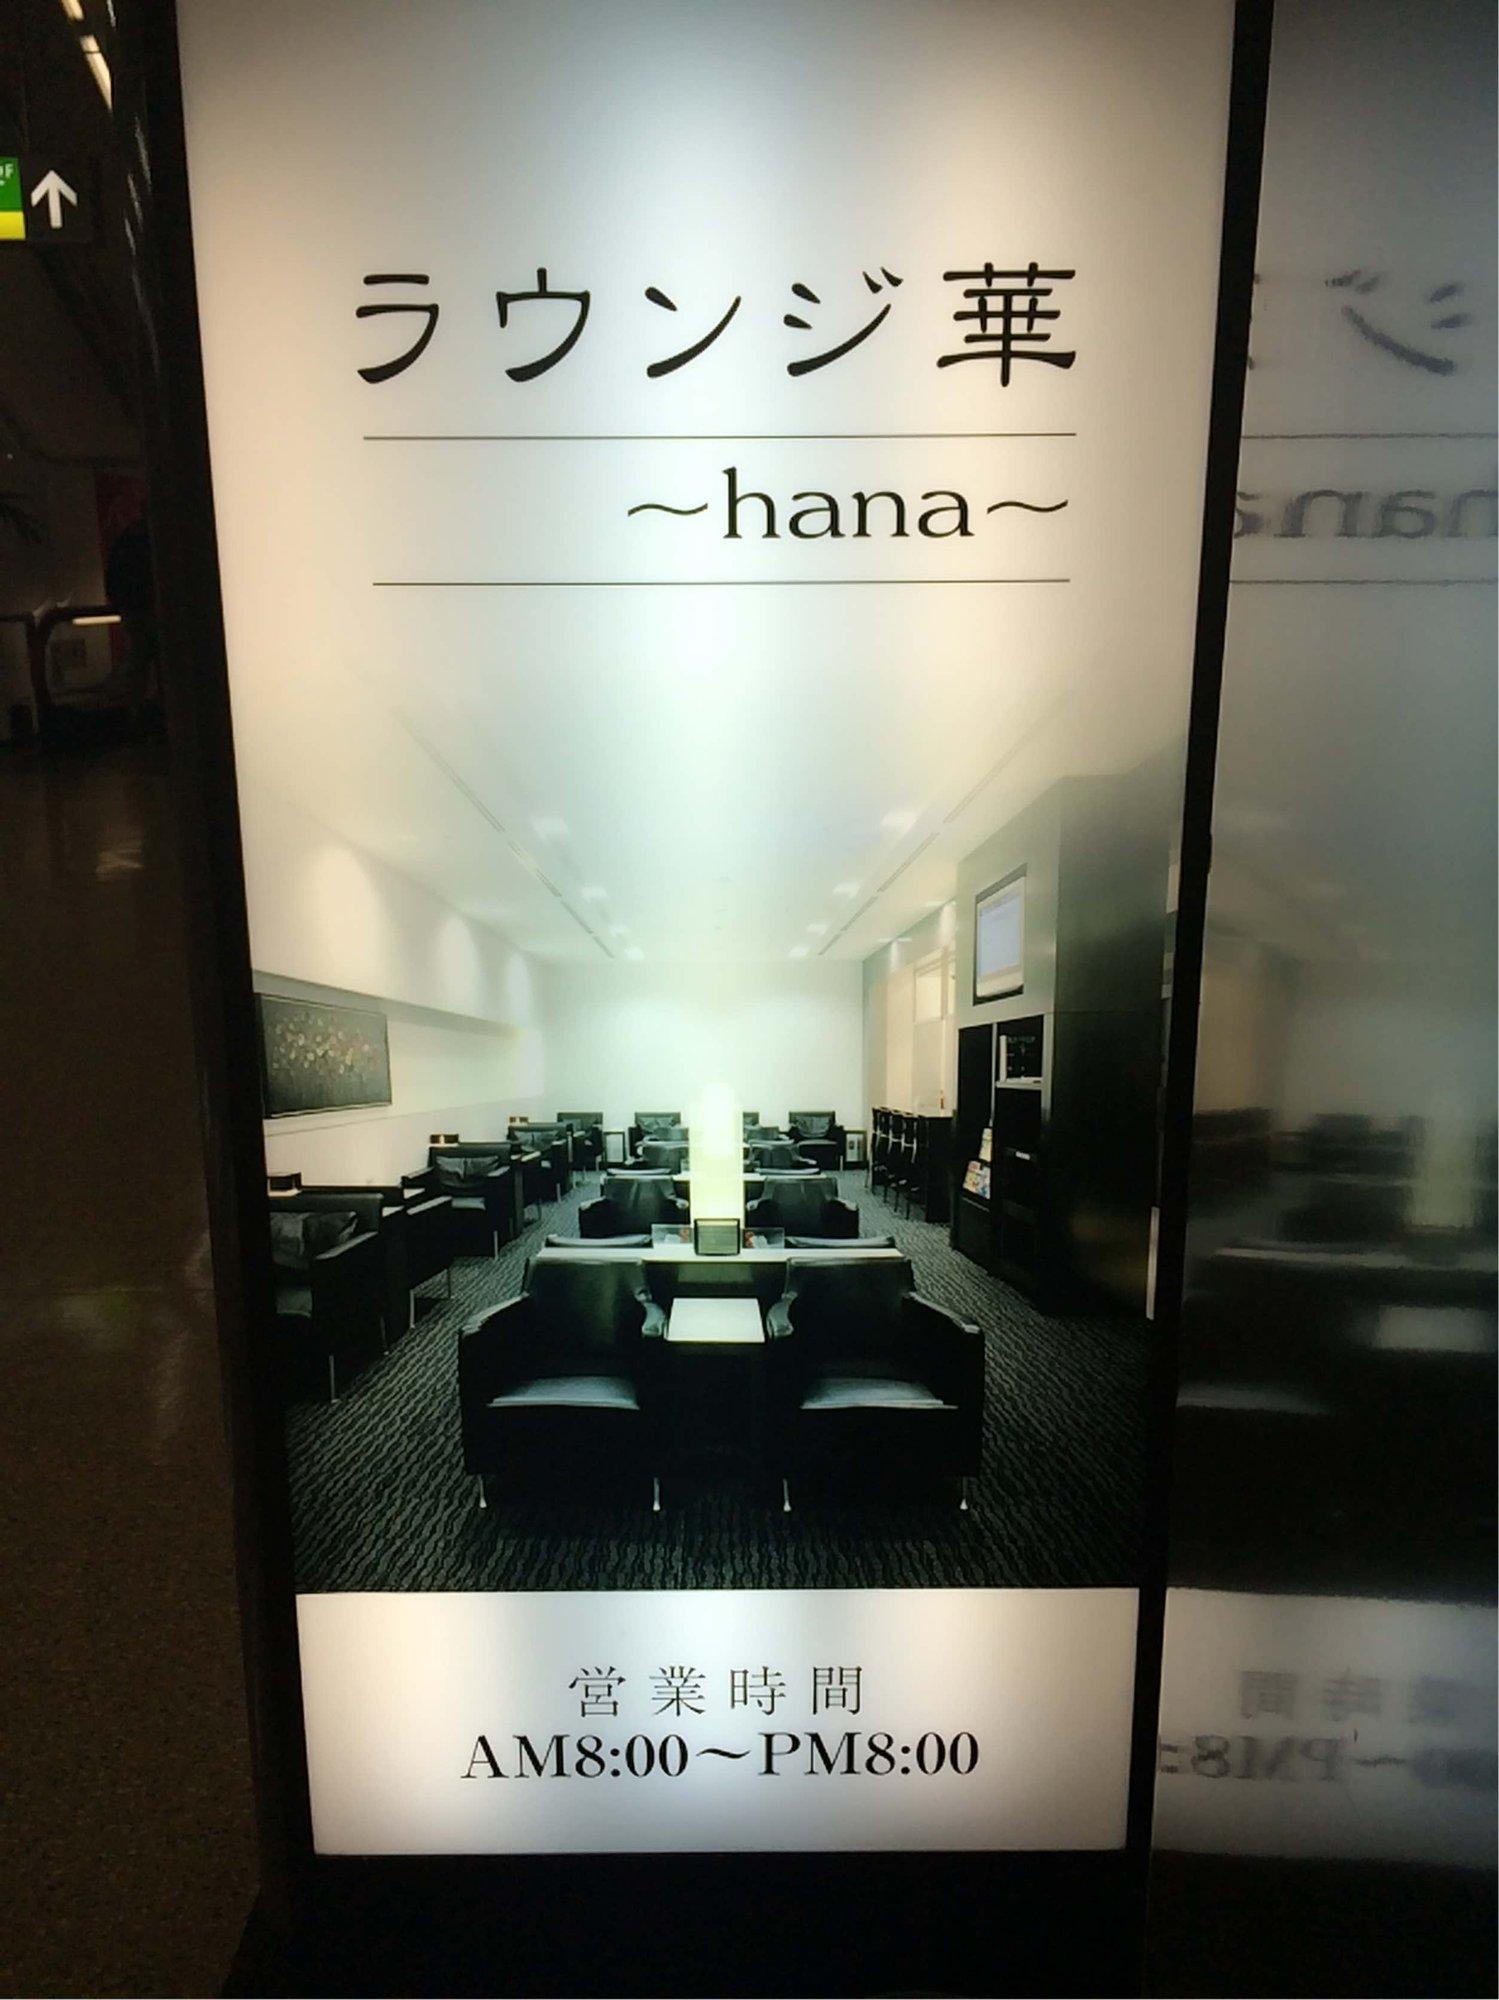 Lounge Hana image 3 of 5